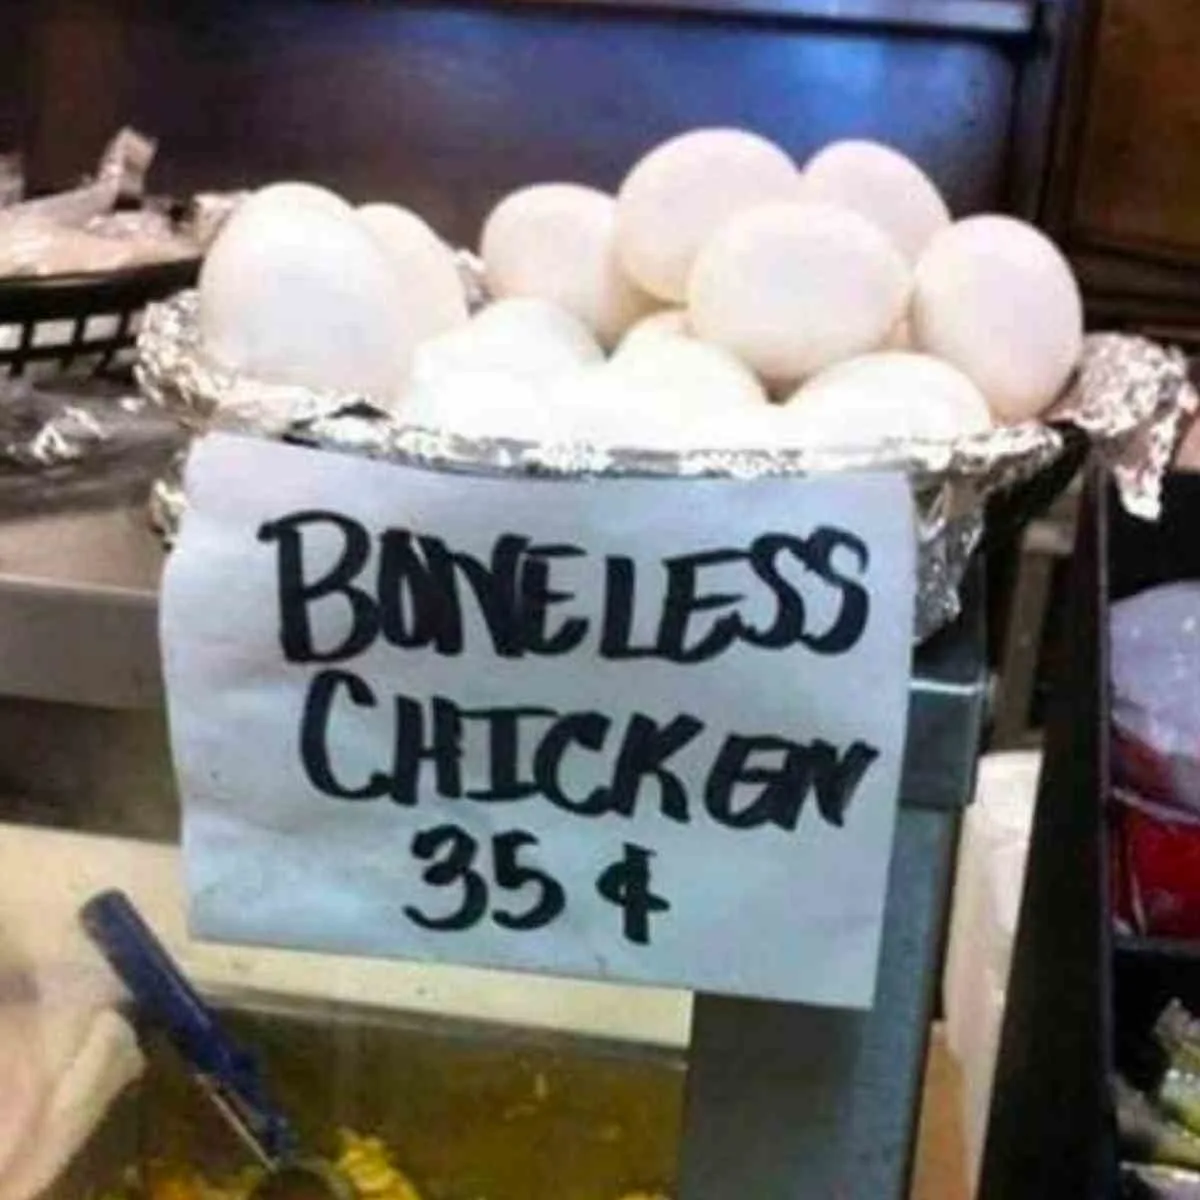 funny egg sign boneless chicken 35 cents